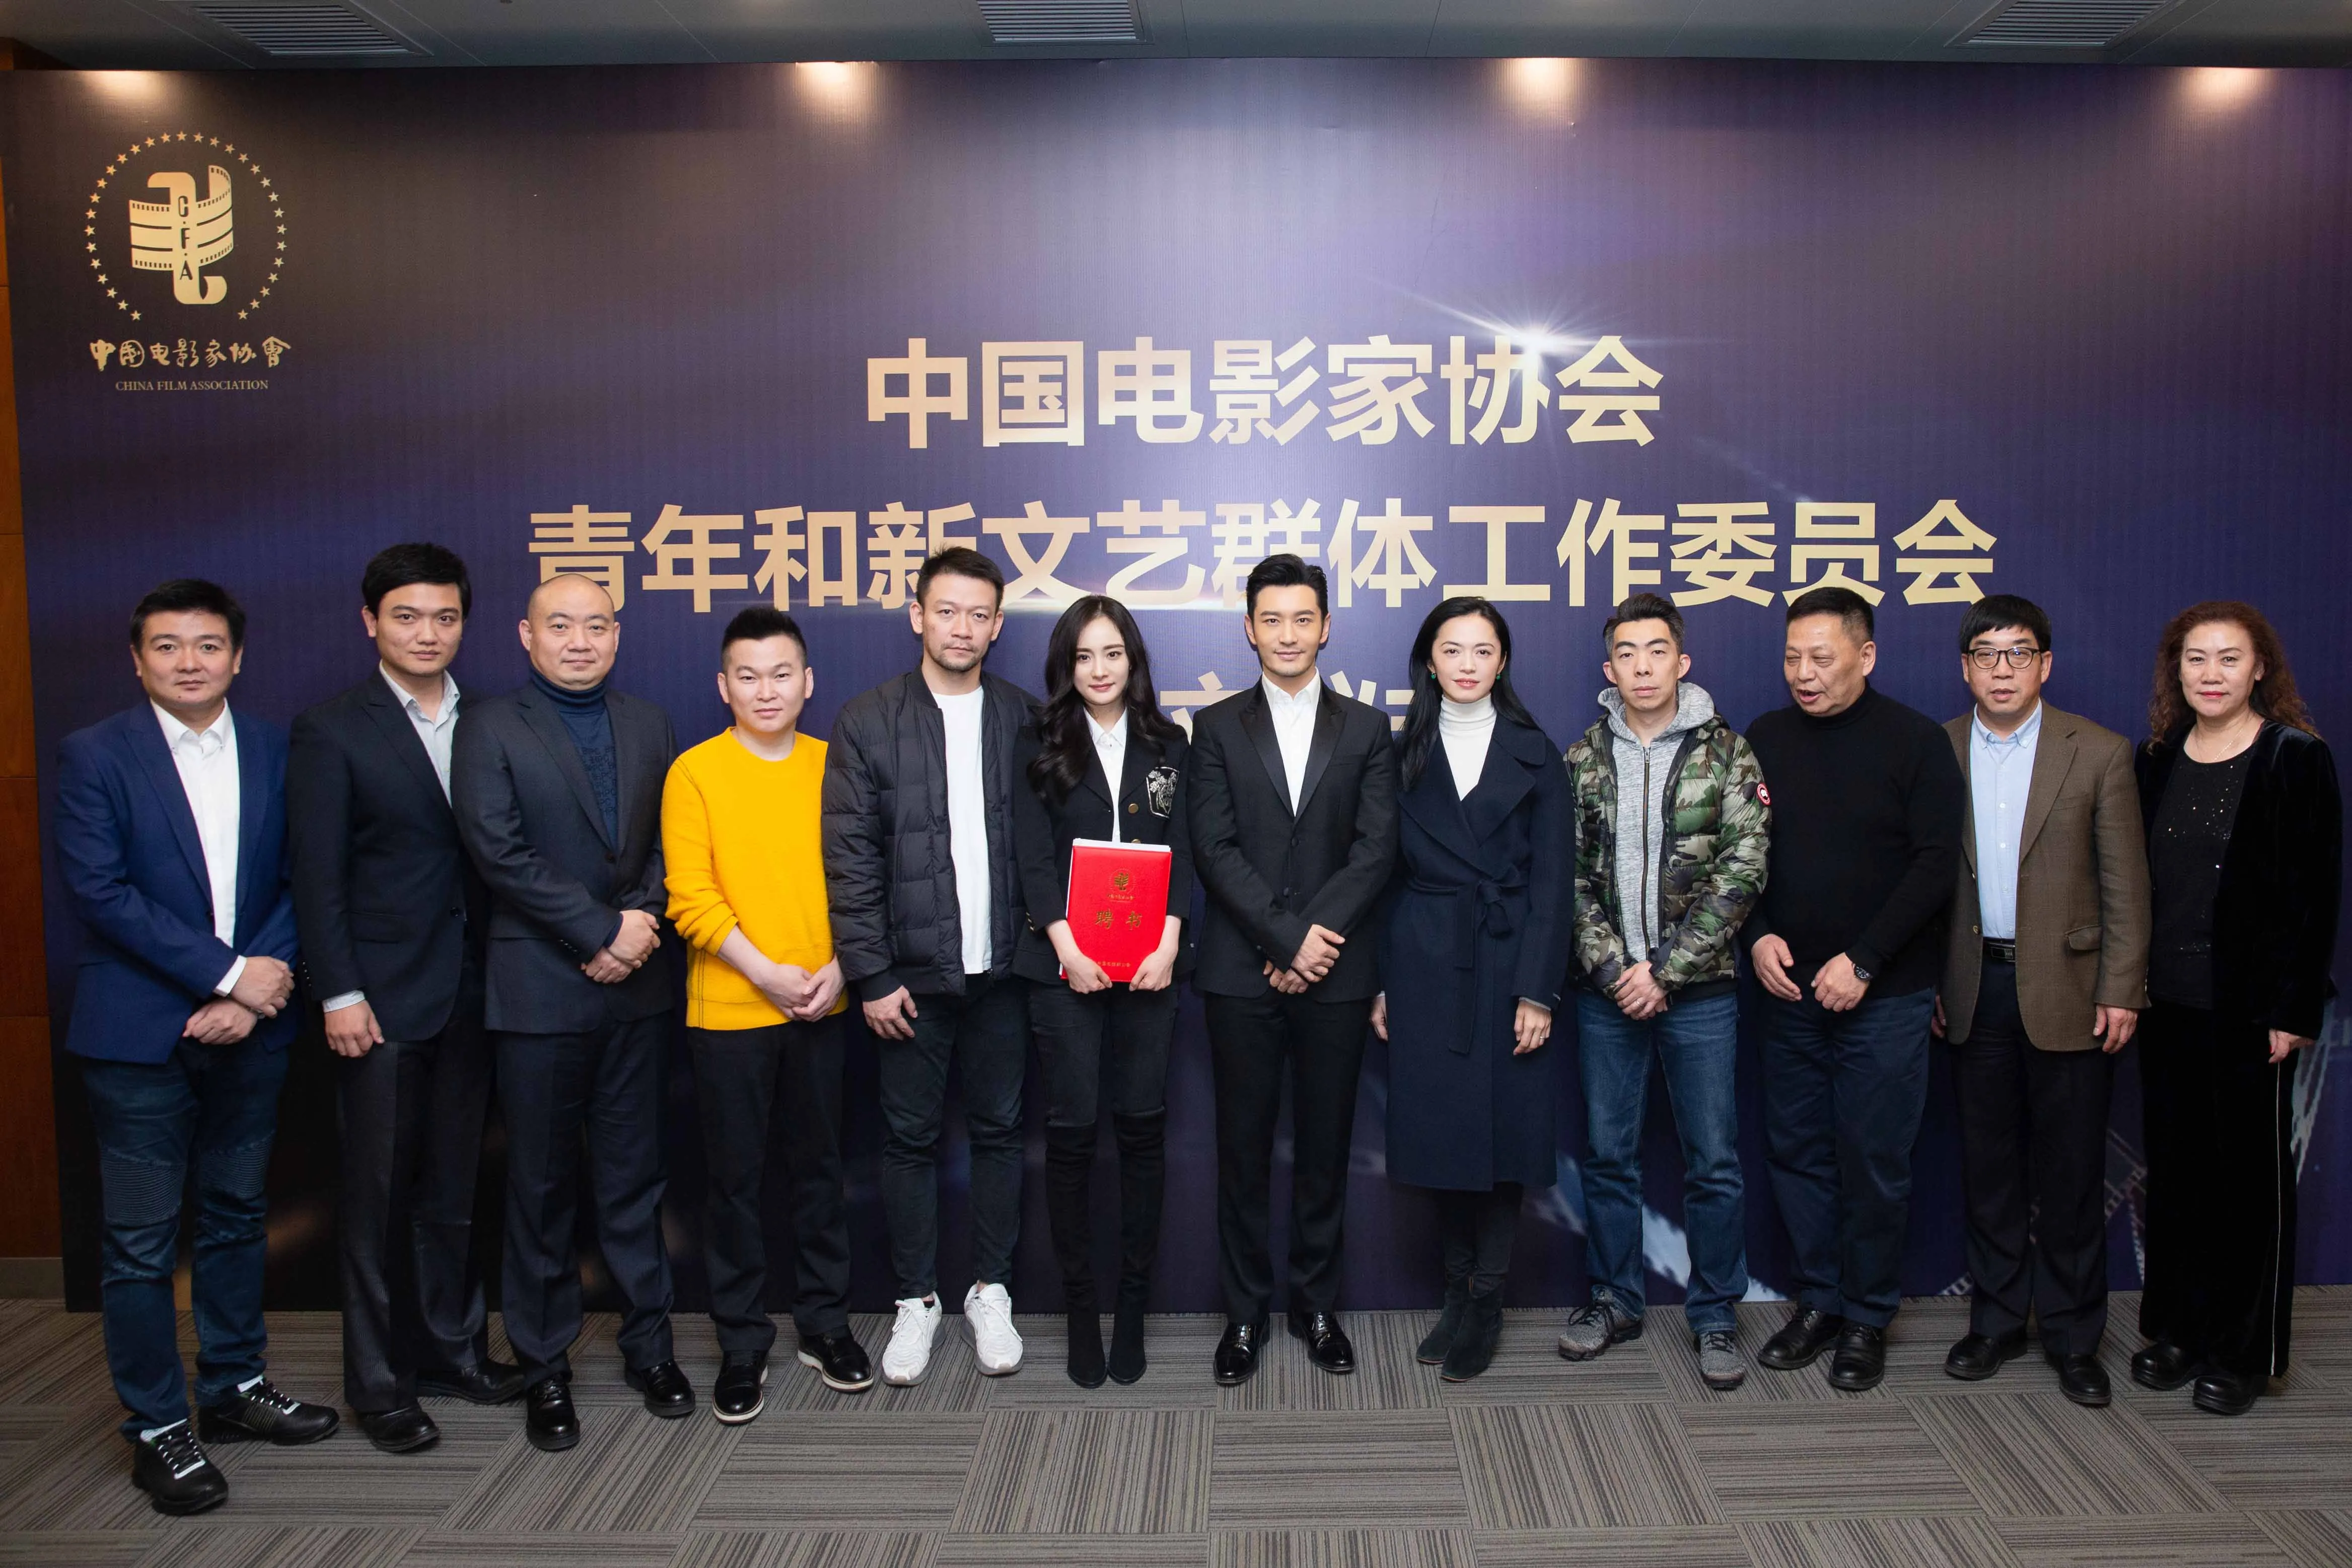  Xiaoming Huang 以青年和新文艺群体工作委员会长身份受邀出席中国影协行风建设培训班开班仪式.jpg